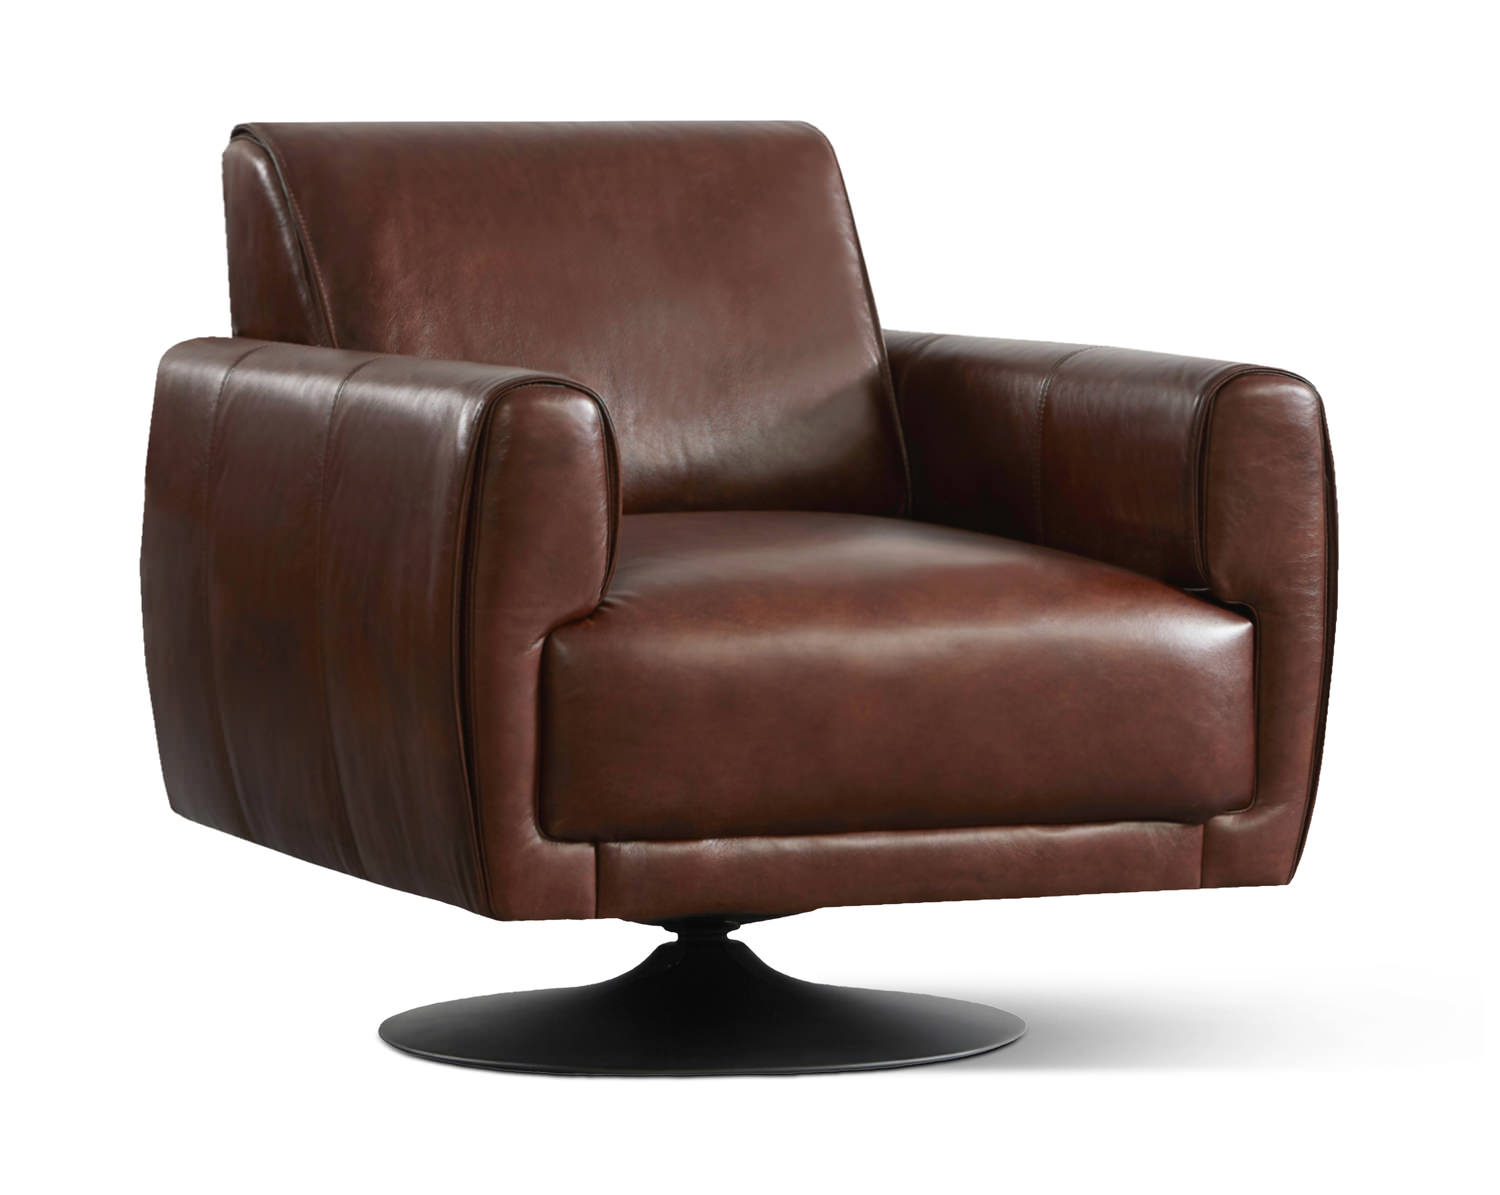 Cole Rye Brown Leather Swivel Chair Sam S Club